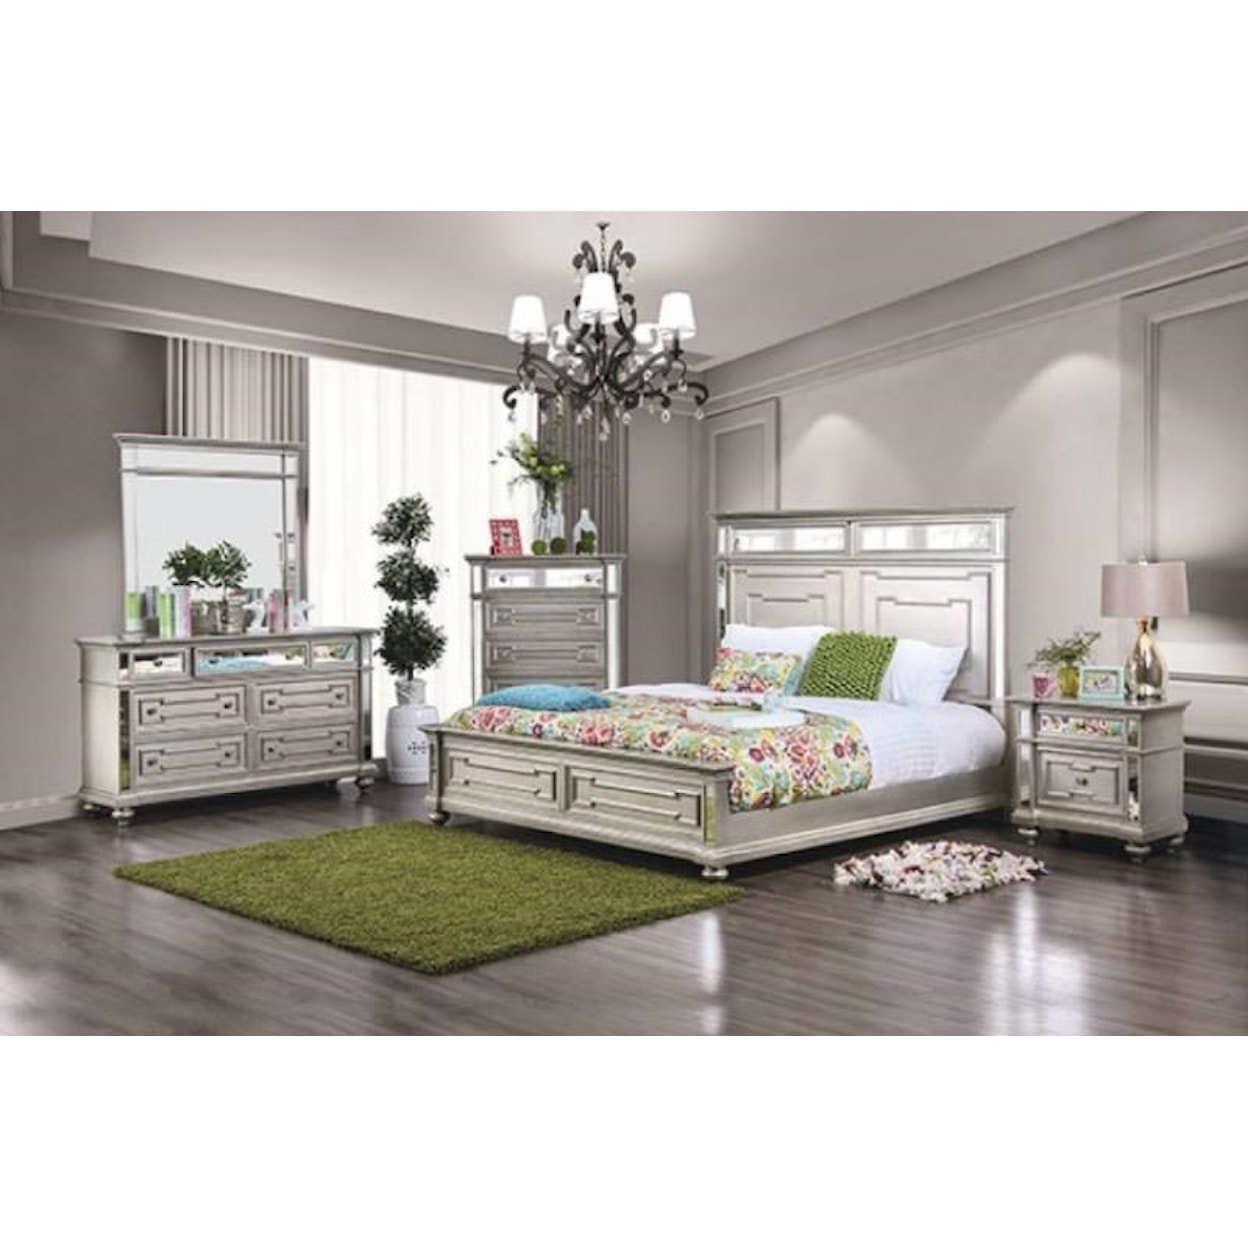 Furniture of America Salamanca Glam King Bed